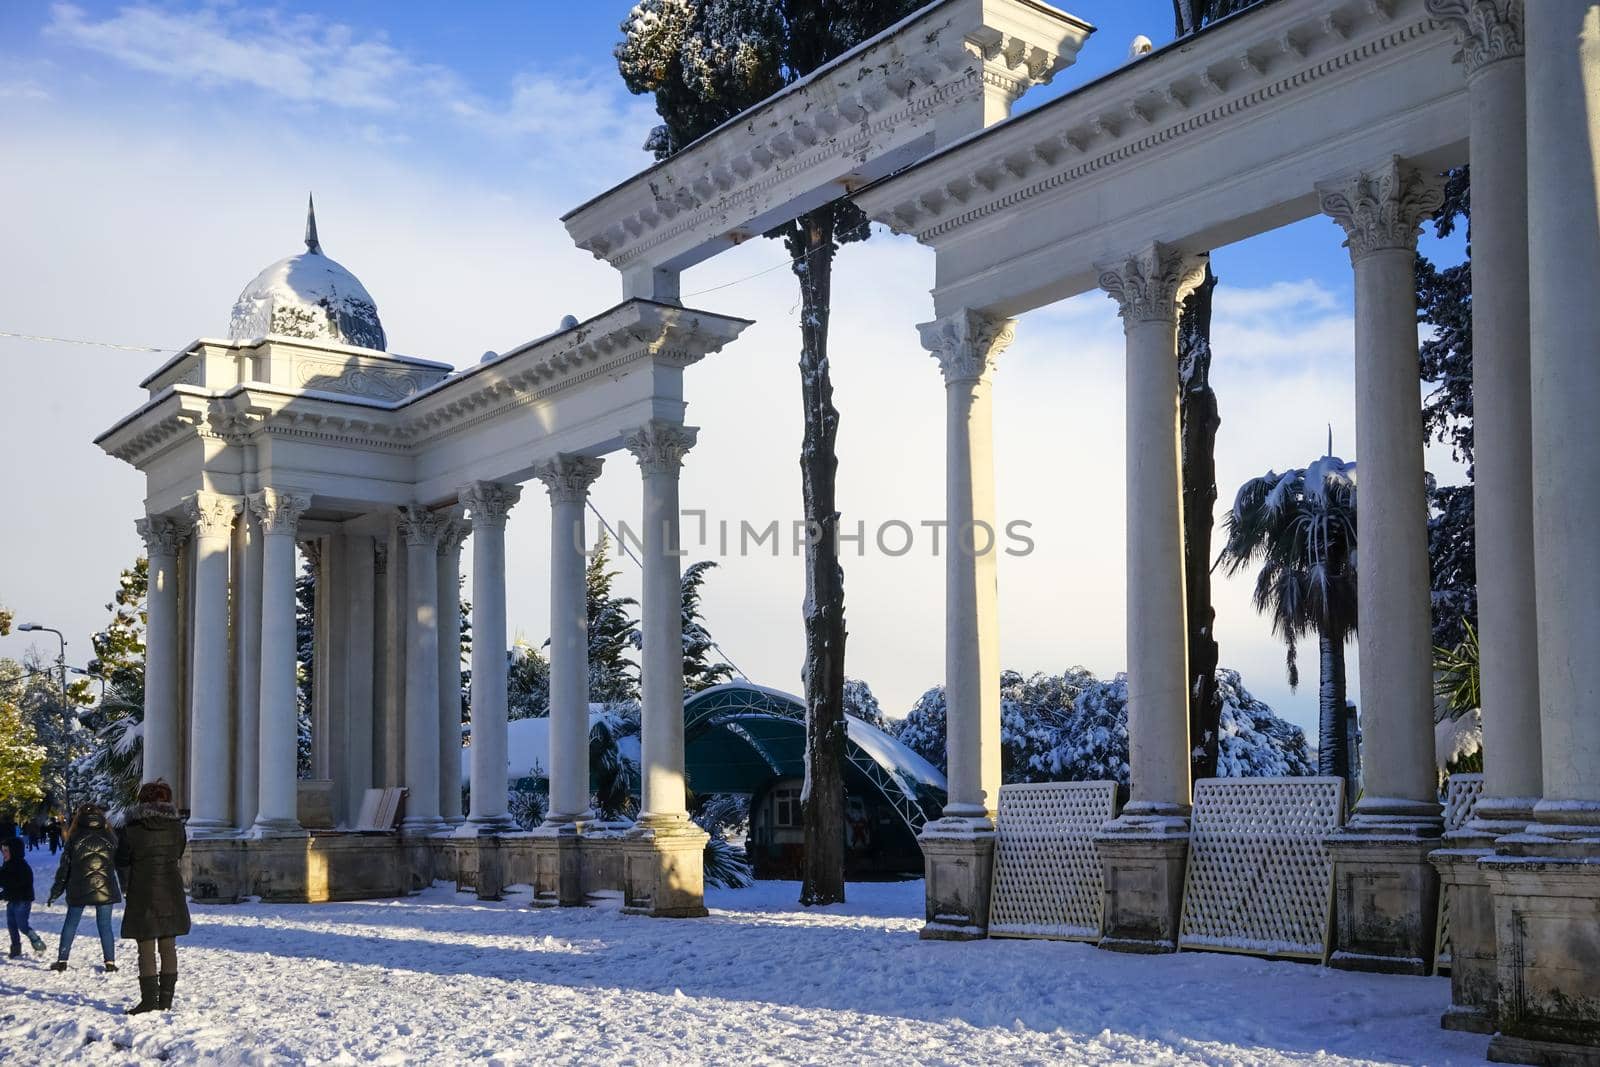 Sukhumi, Abkhazia-January 27, 2017: Urban landscape in winter with snow in the sub-tropics.